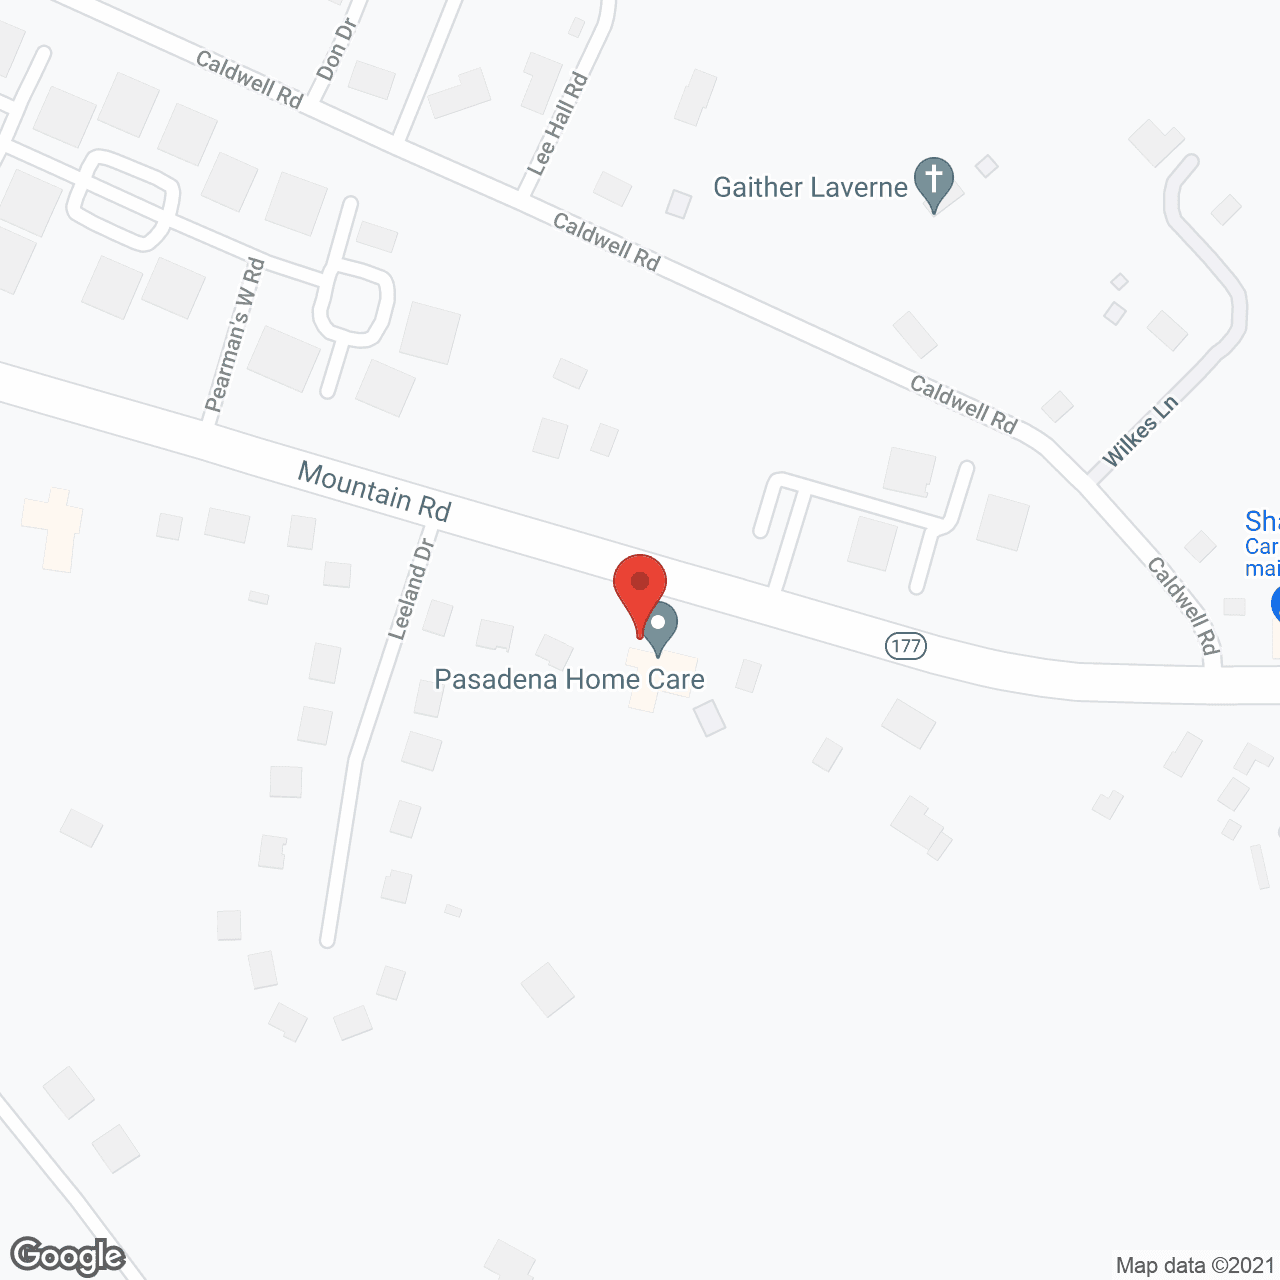 Pasadena Home Care in google map